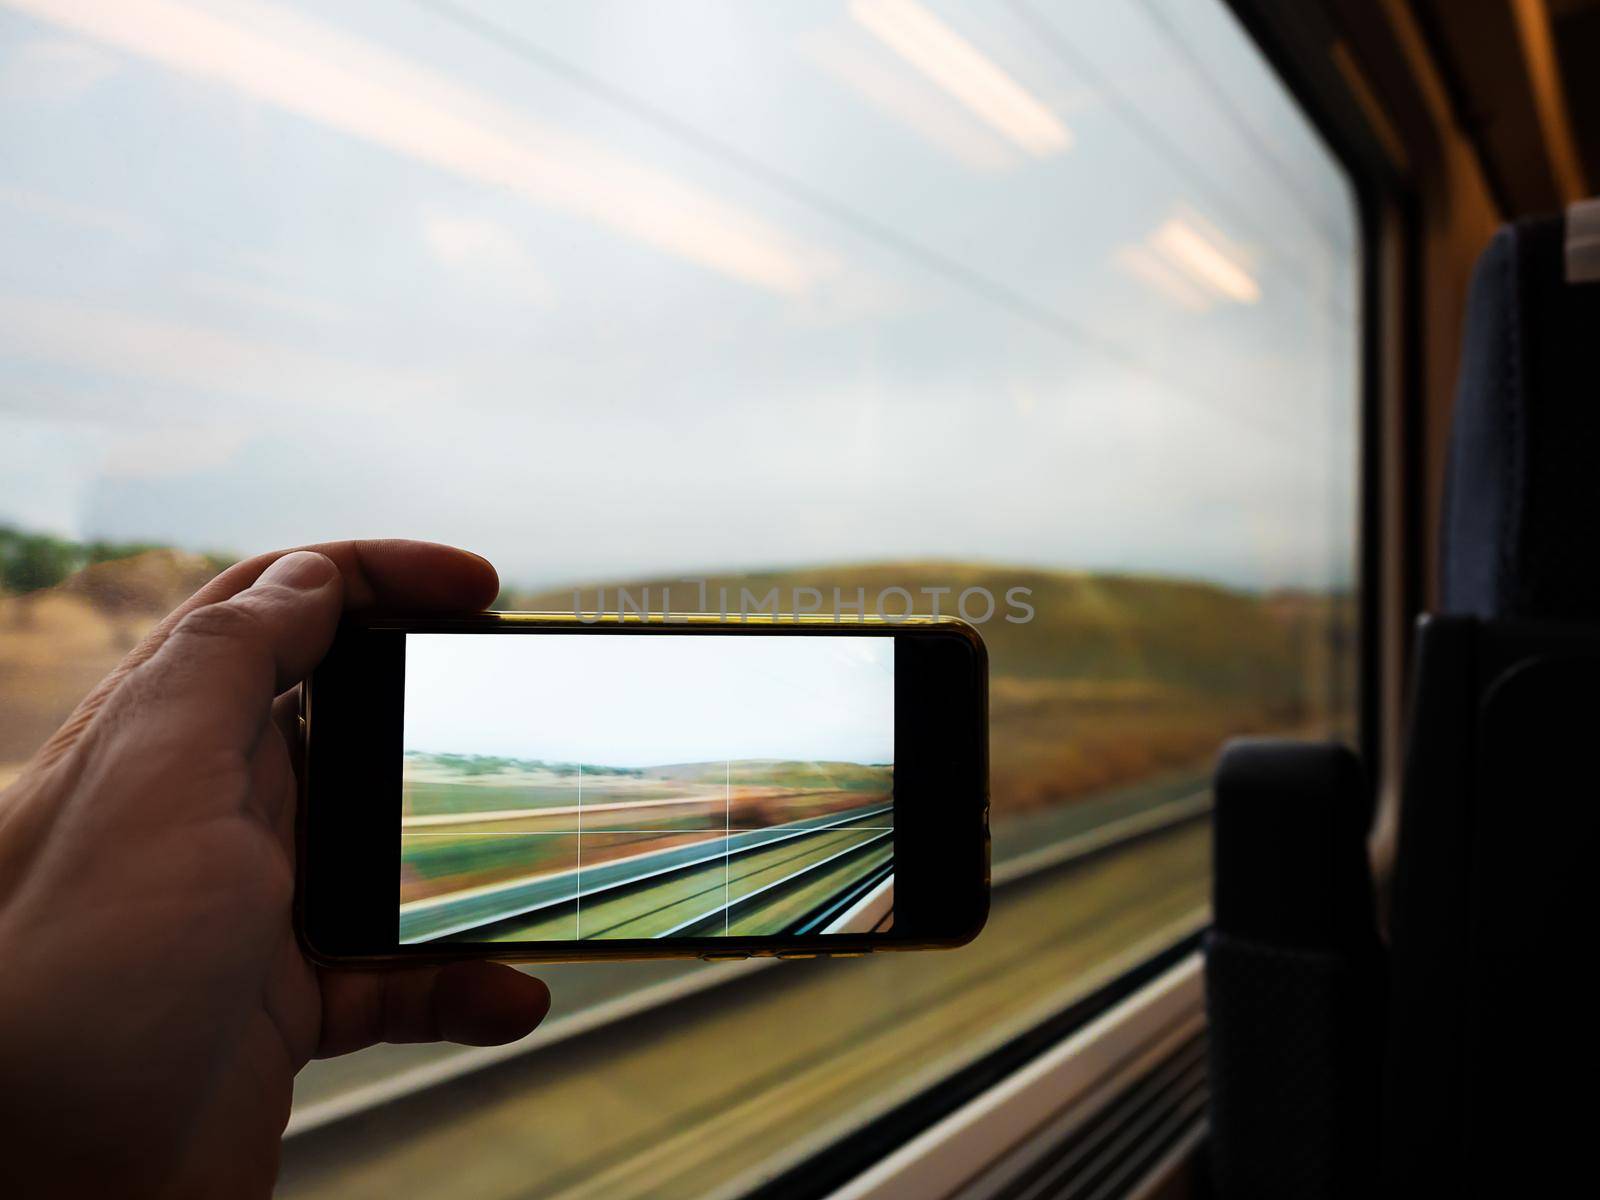 Taking photo through the window of the train by raulmelldo